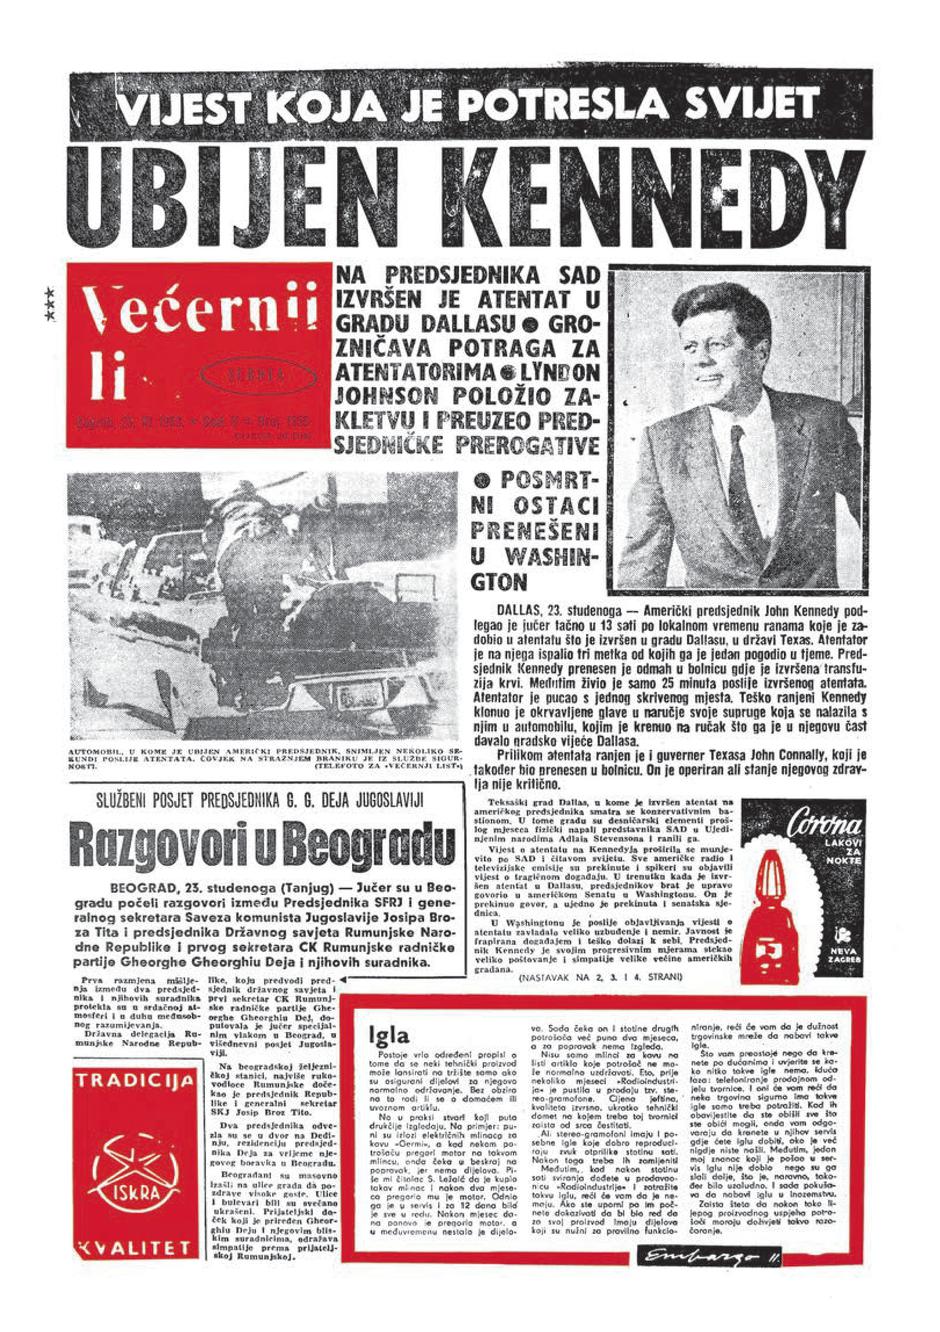 Naslovnica sa atentatom na Kennedyja